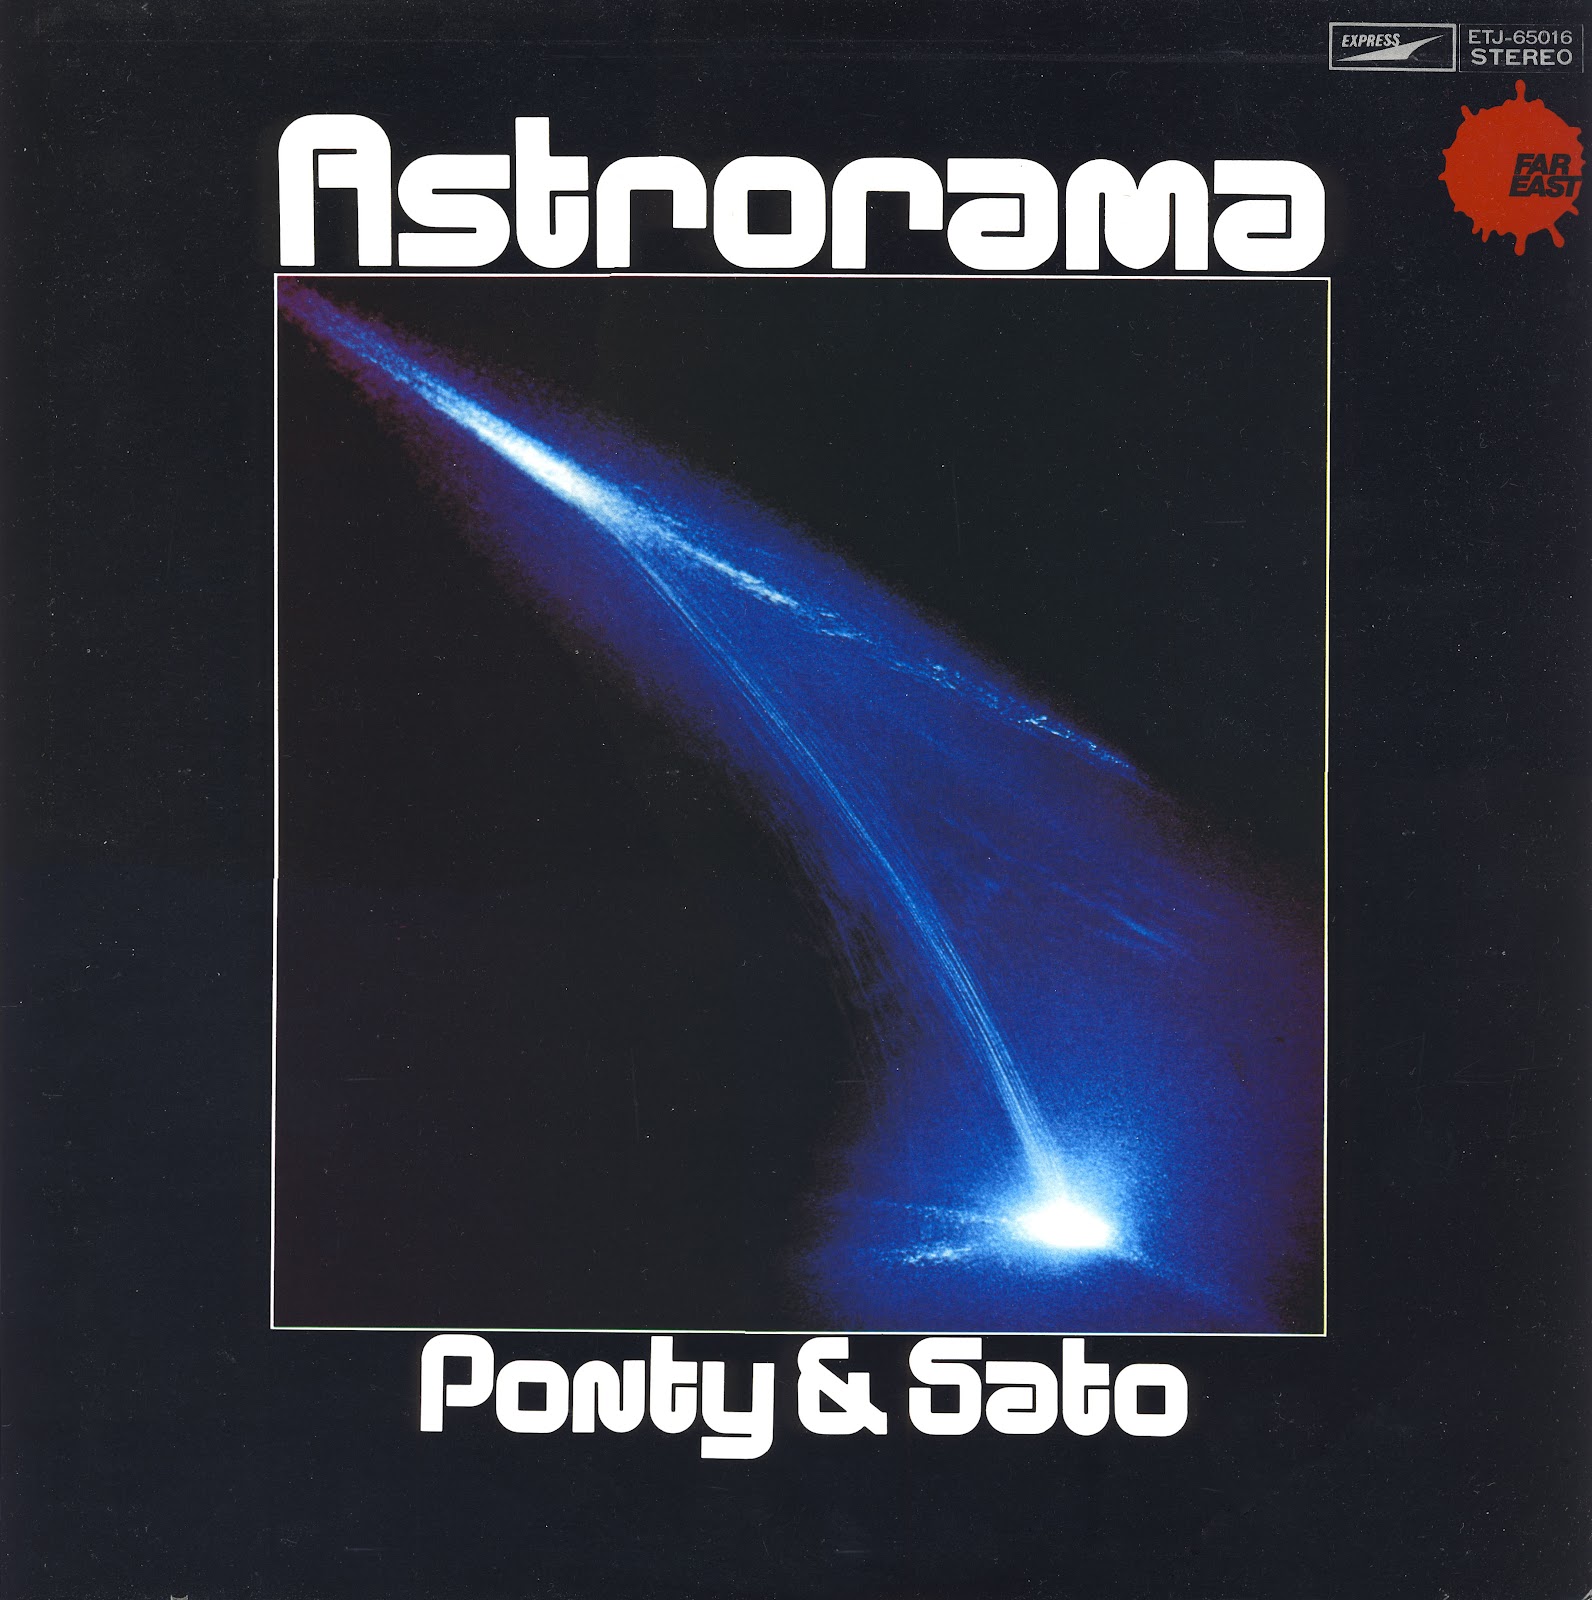 Ponty & Sato — Astrorama